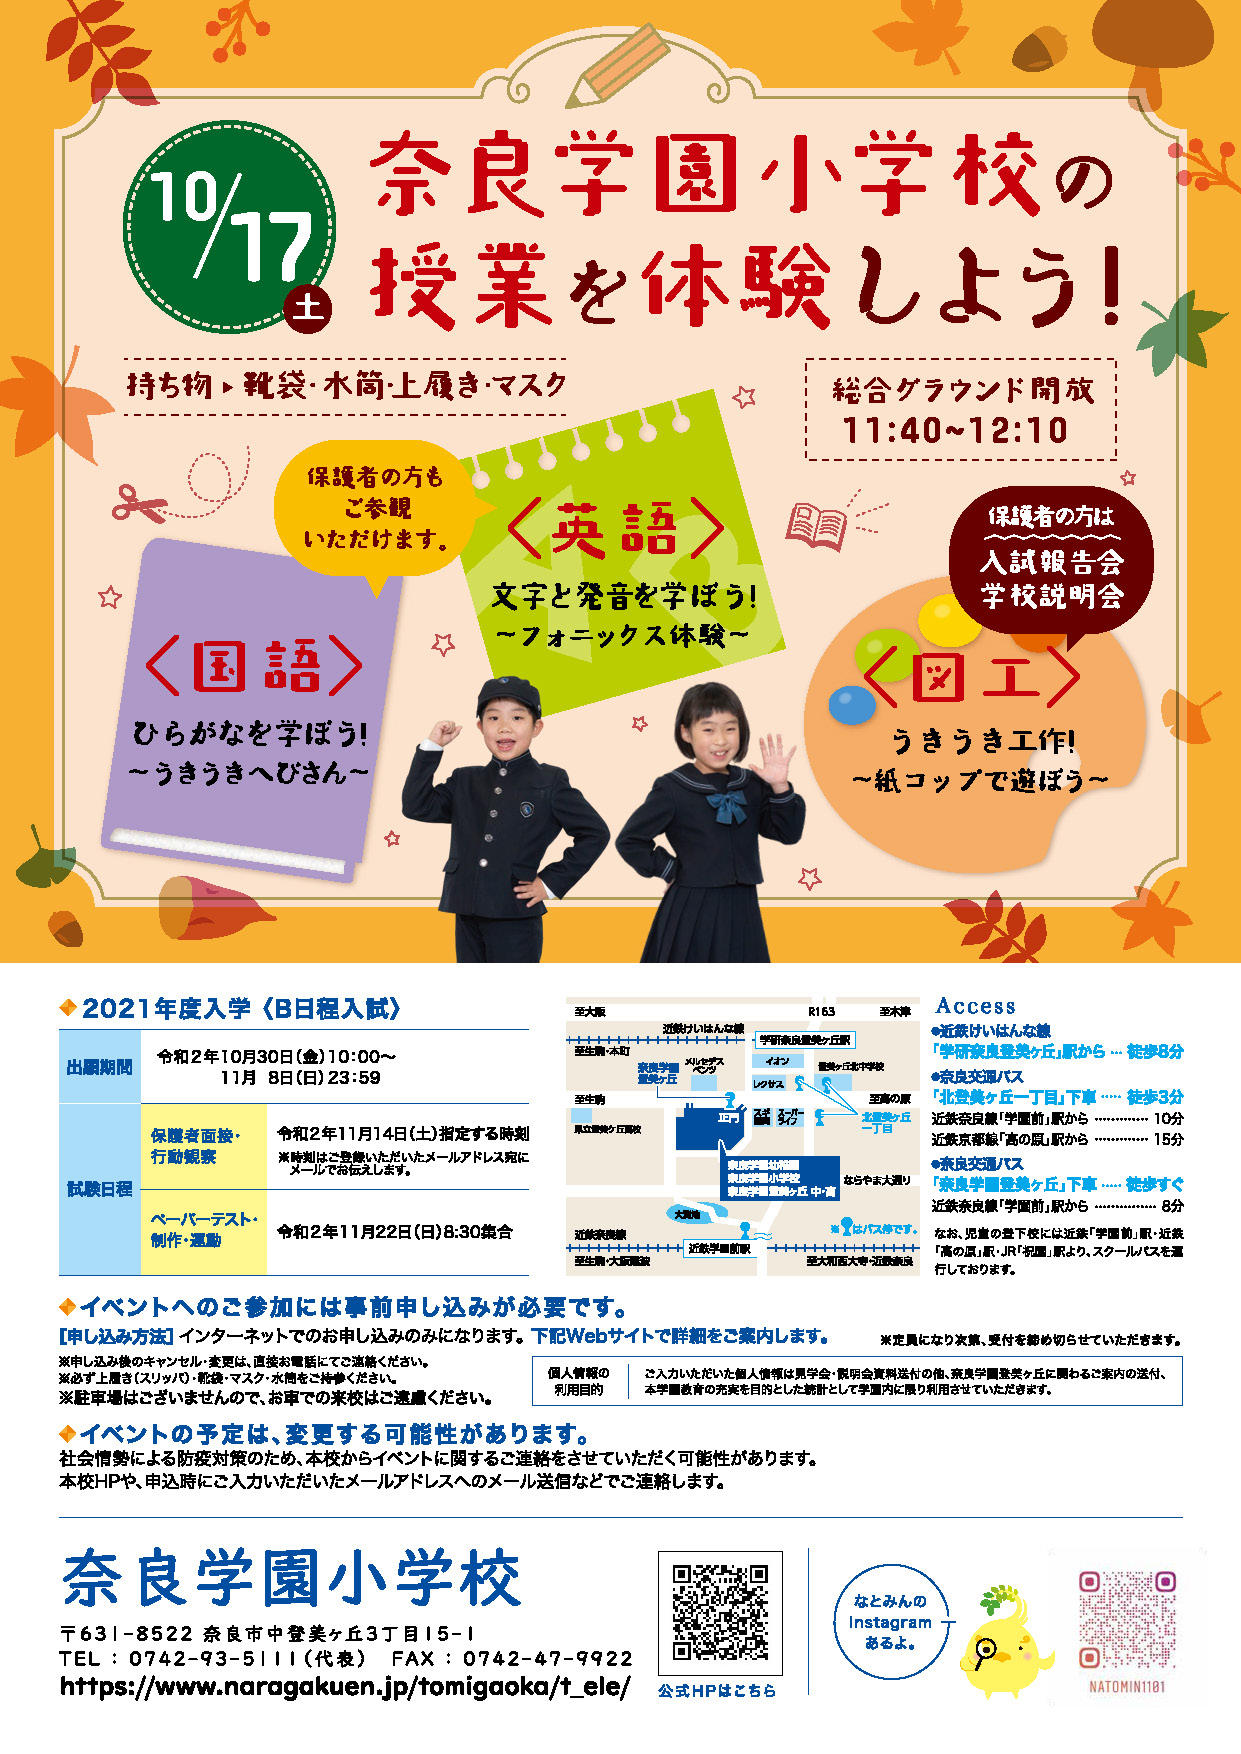 https://www.naragakuen.jp/tomigaoka/news_event/images/20200917/9acbd9fba750ae8a426c3ab1dcf415bfab052da2.jpg